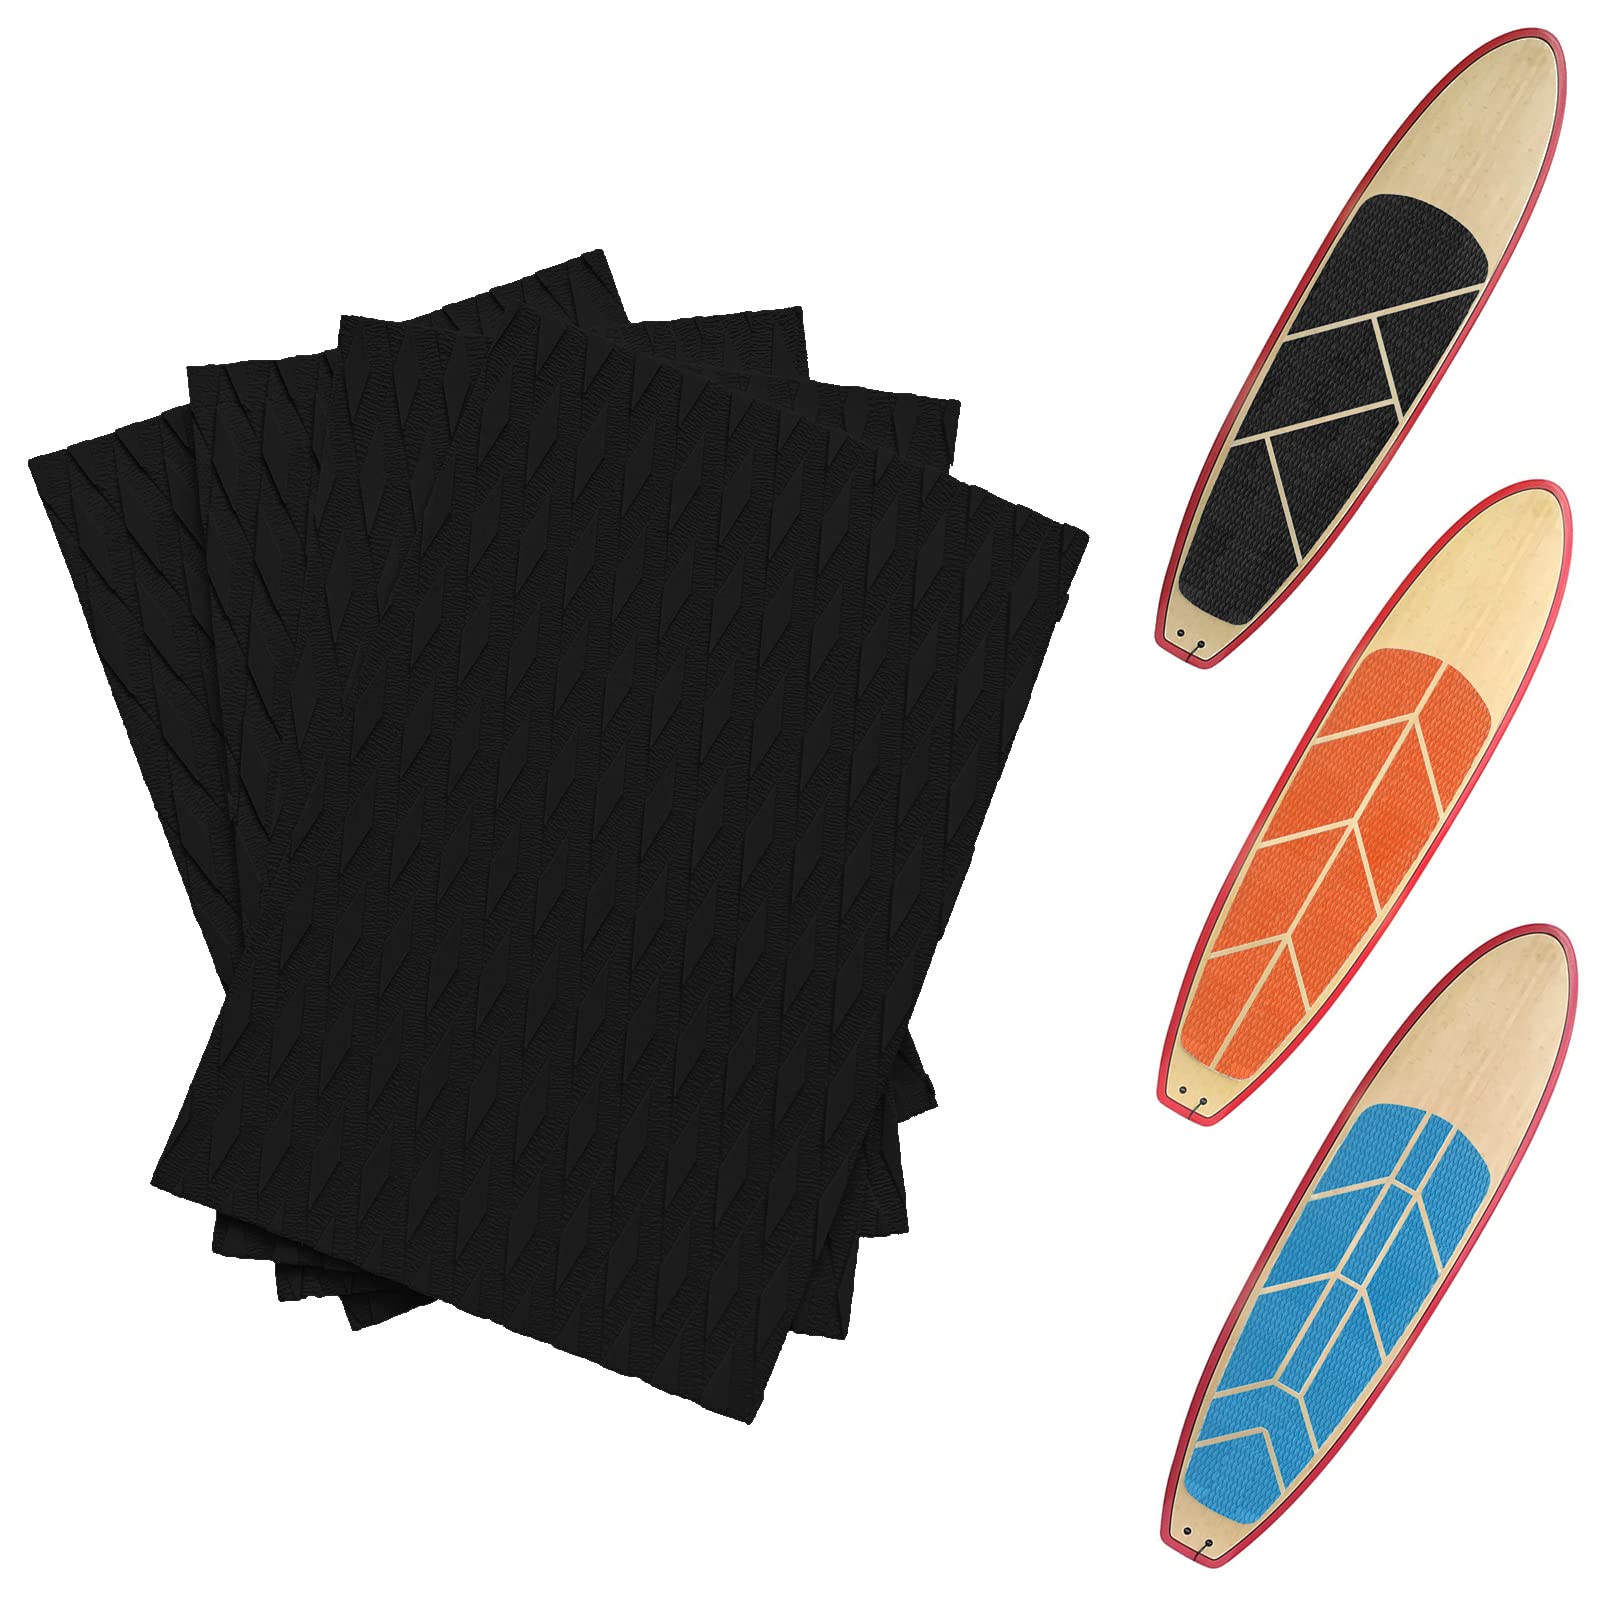 Foammaker Universal 34in x 10in DIY Traction Non-Slip Grip Mat Pad,  Versatile & Trimmable Sheet of EVA for SUP, Boat Decks, Kayaks, Surfboards